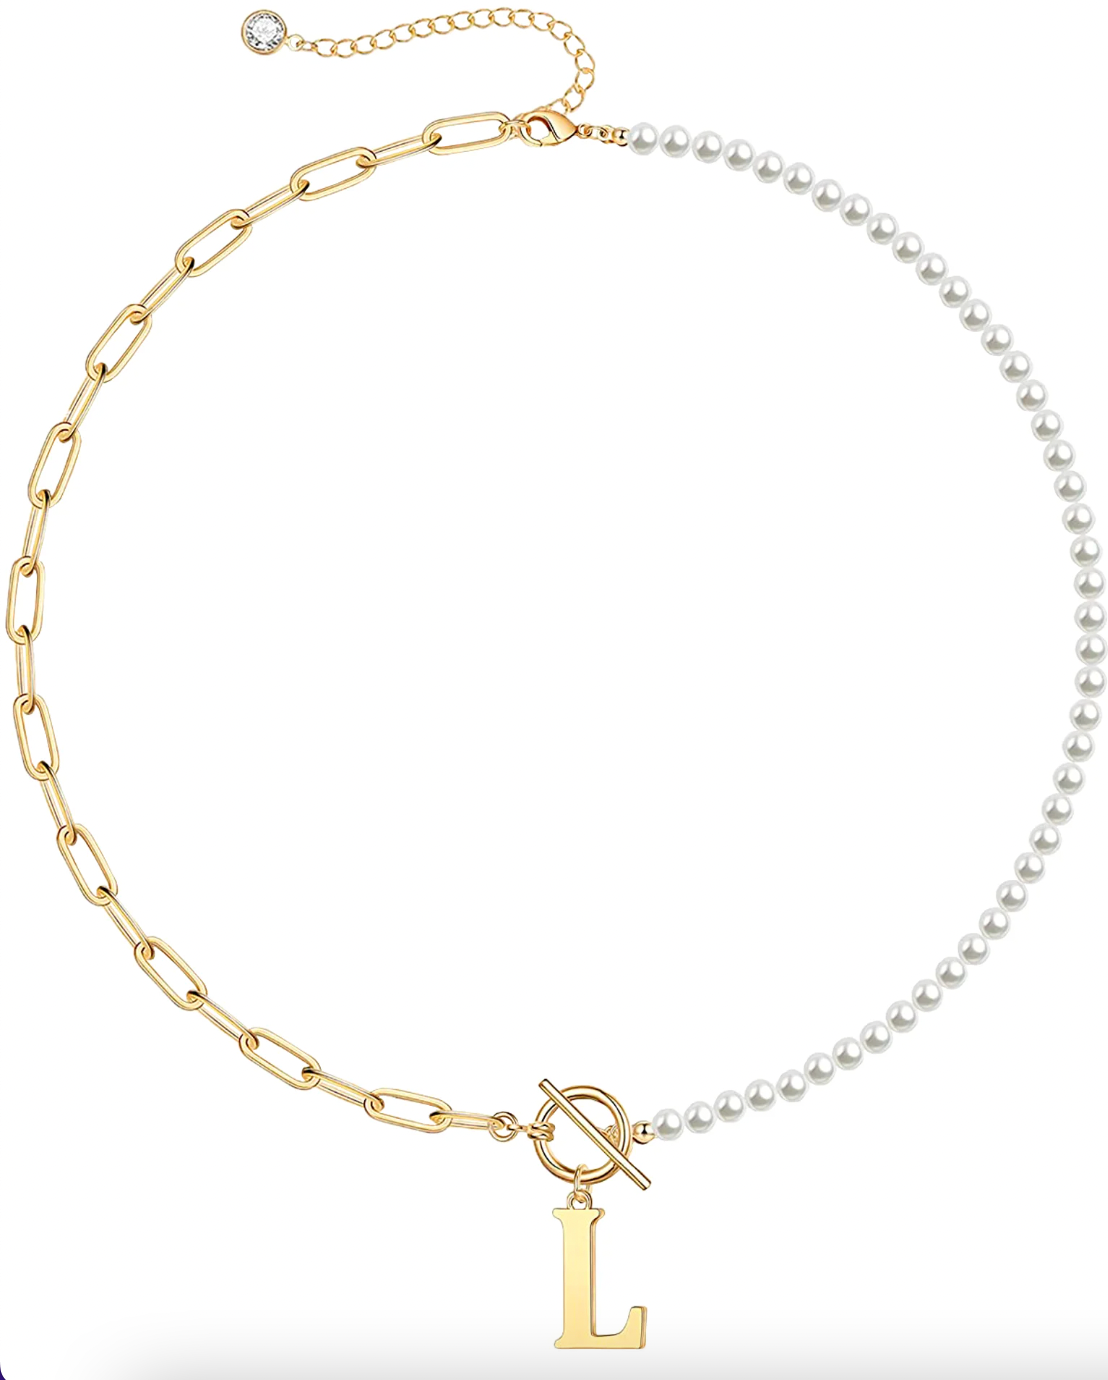 Mini Nugget Gemstone Beaded Necklace Adjustable 41-46cm/16-18' in